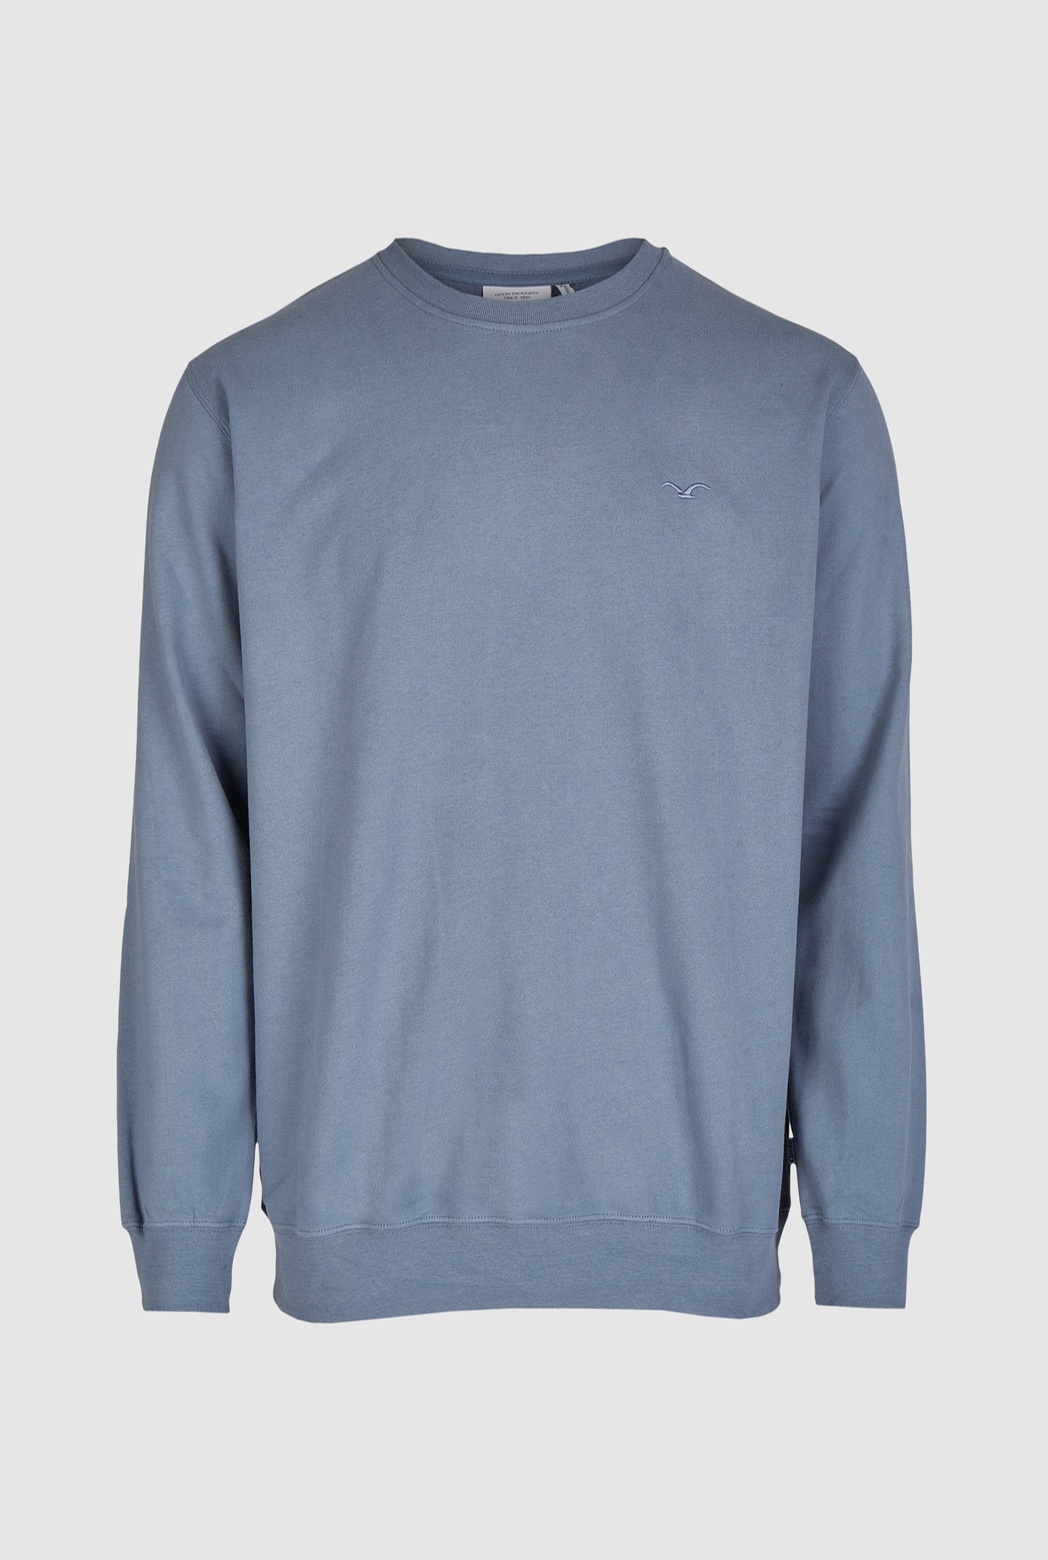 Sweatshirt CREWNECK blau veganes vegane Shop LIGULL Vegan - Le Cleptomanicx und in Mode Accessoires |